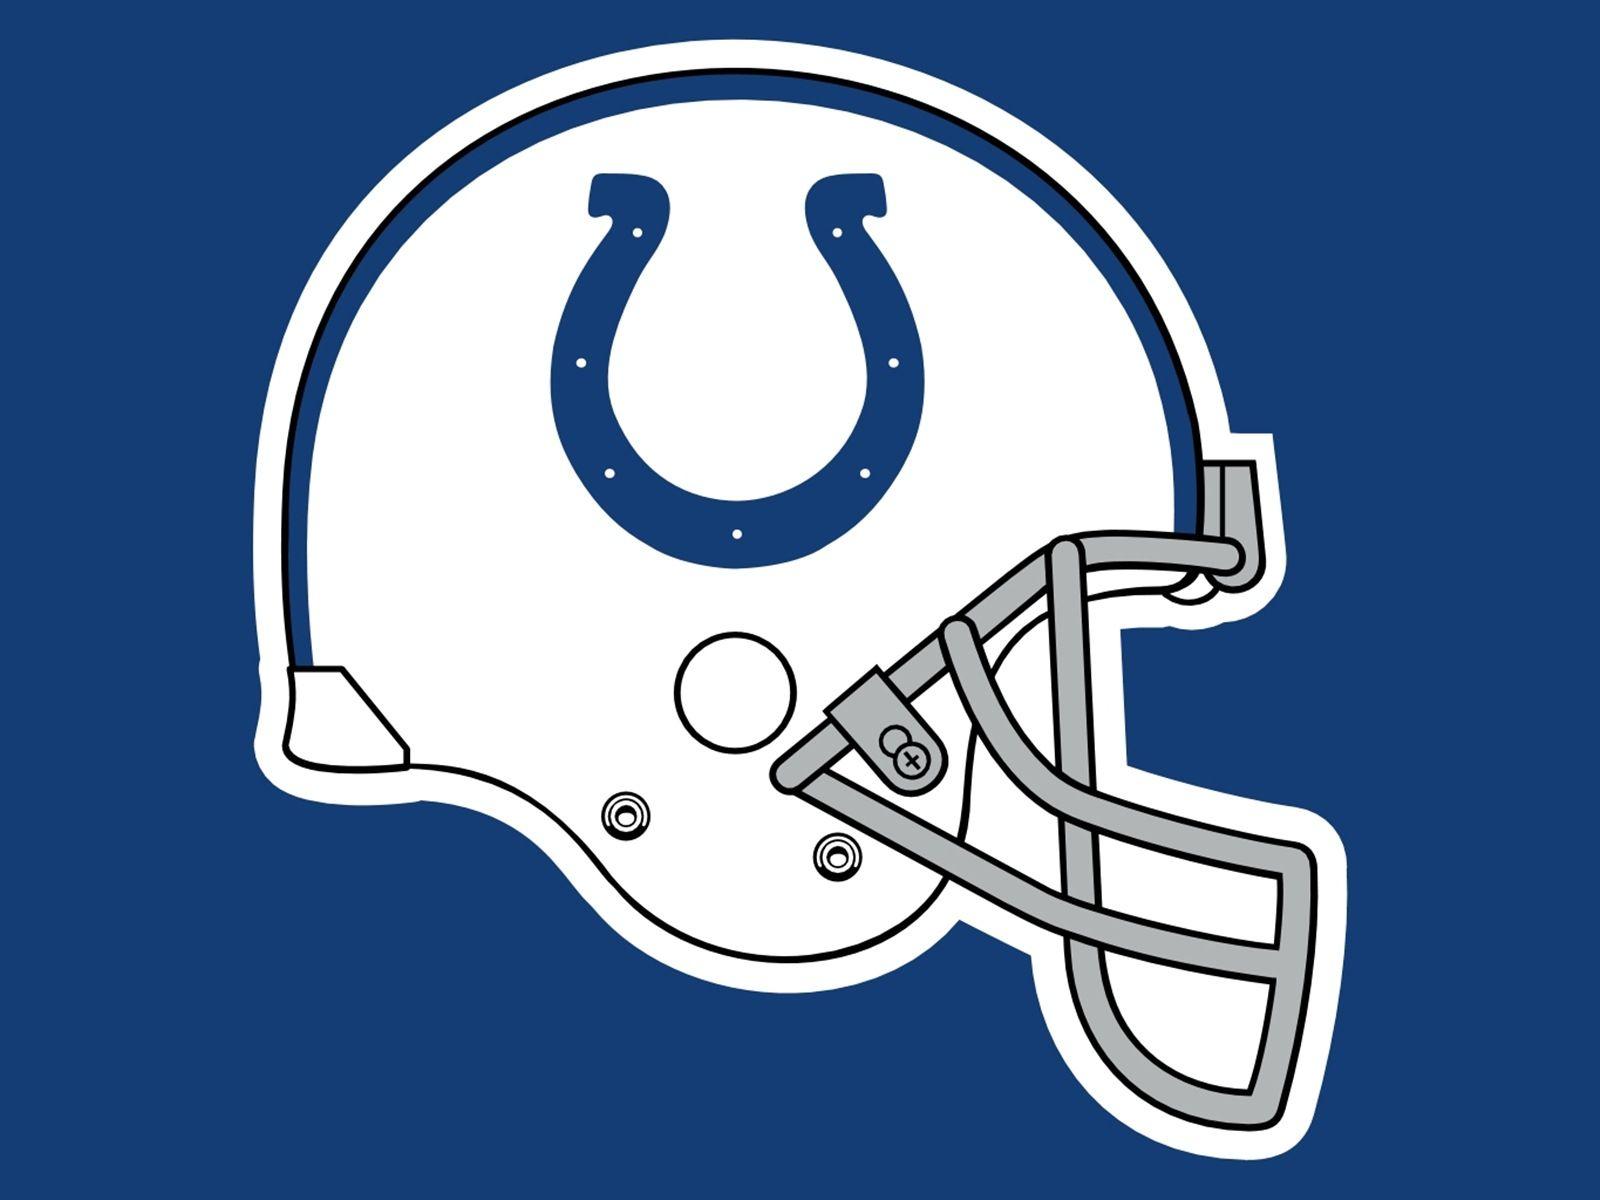 Colts Helmet Logo - colors colts logo | All logos world | Indianapolis Colts, NFL, Nfl ...